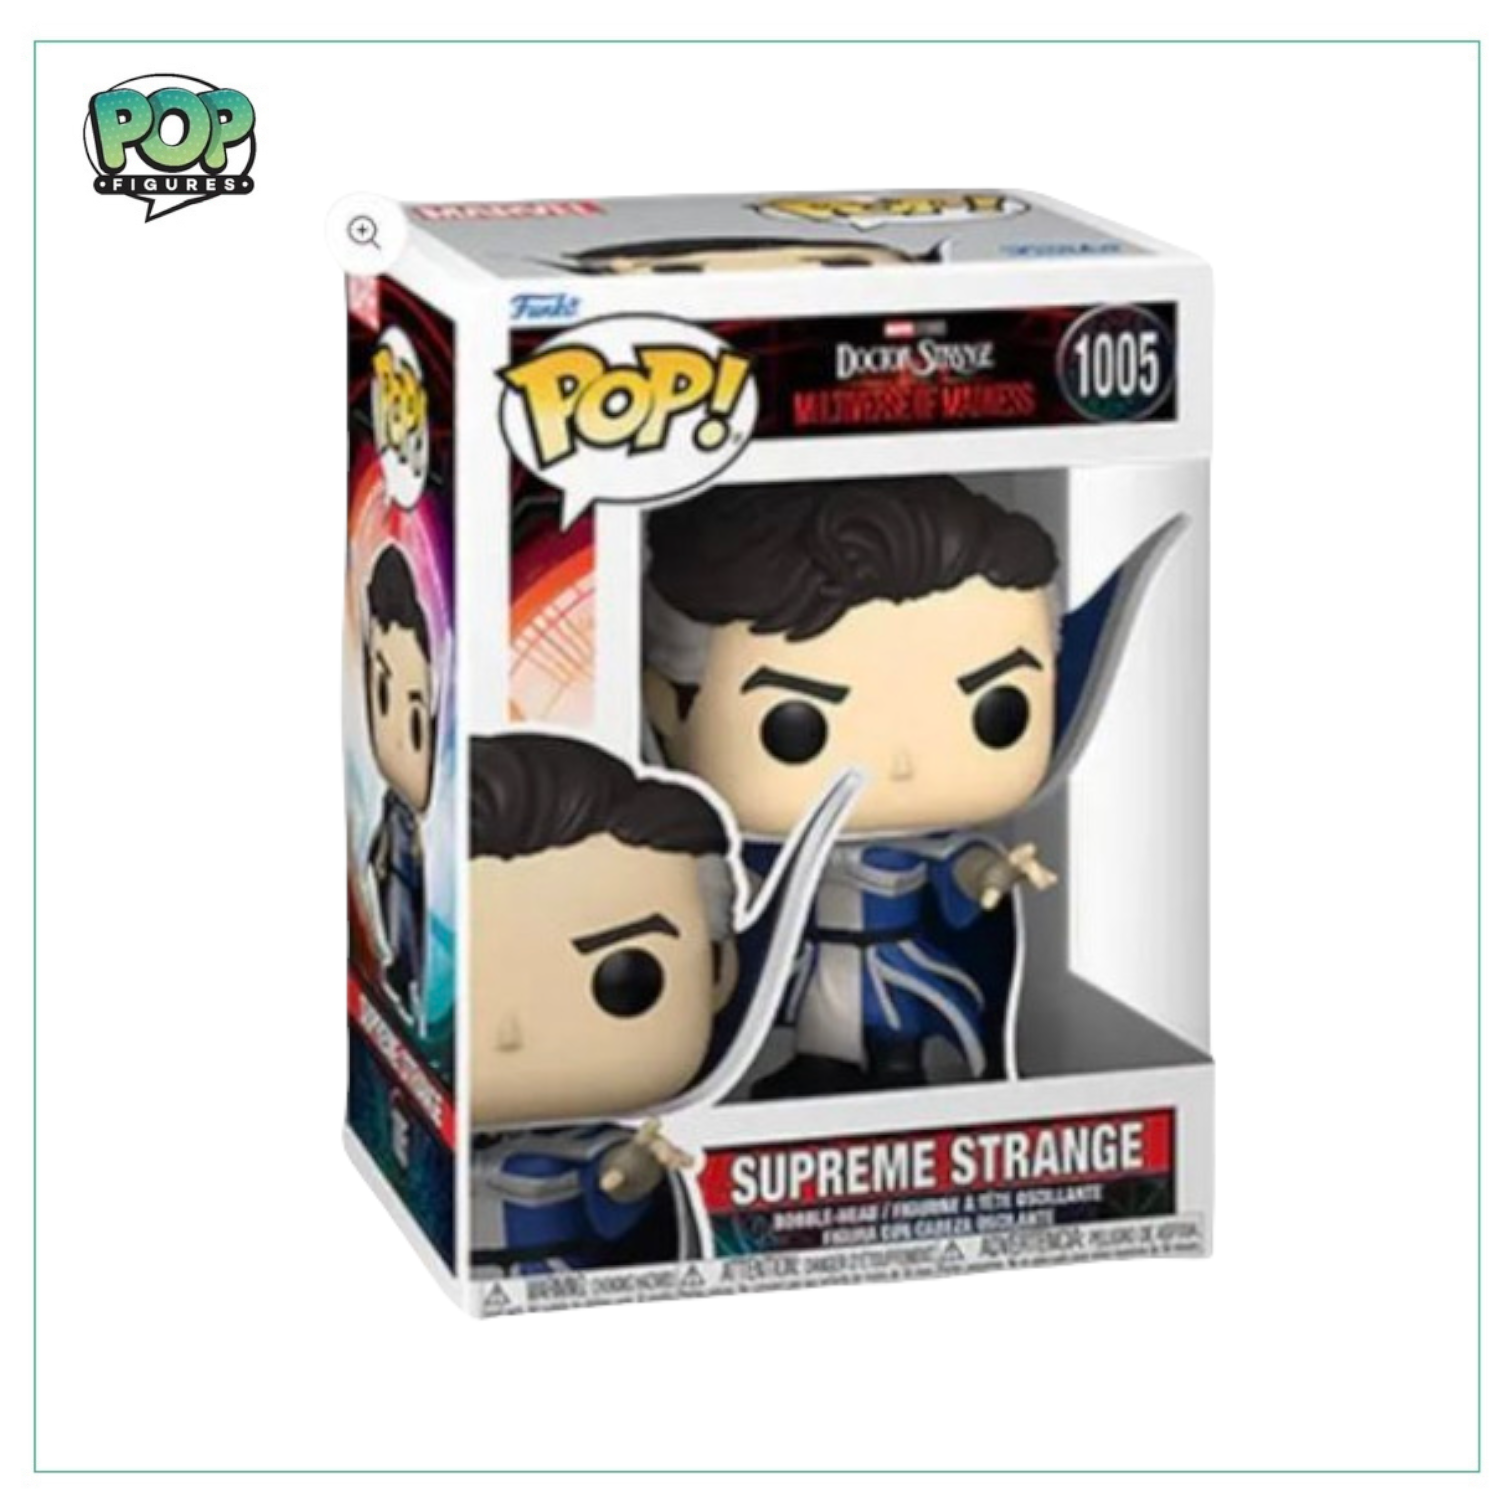 Supreme Strange #1005 Funko Pop! Doctor Strange and the Multiverse of Madness